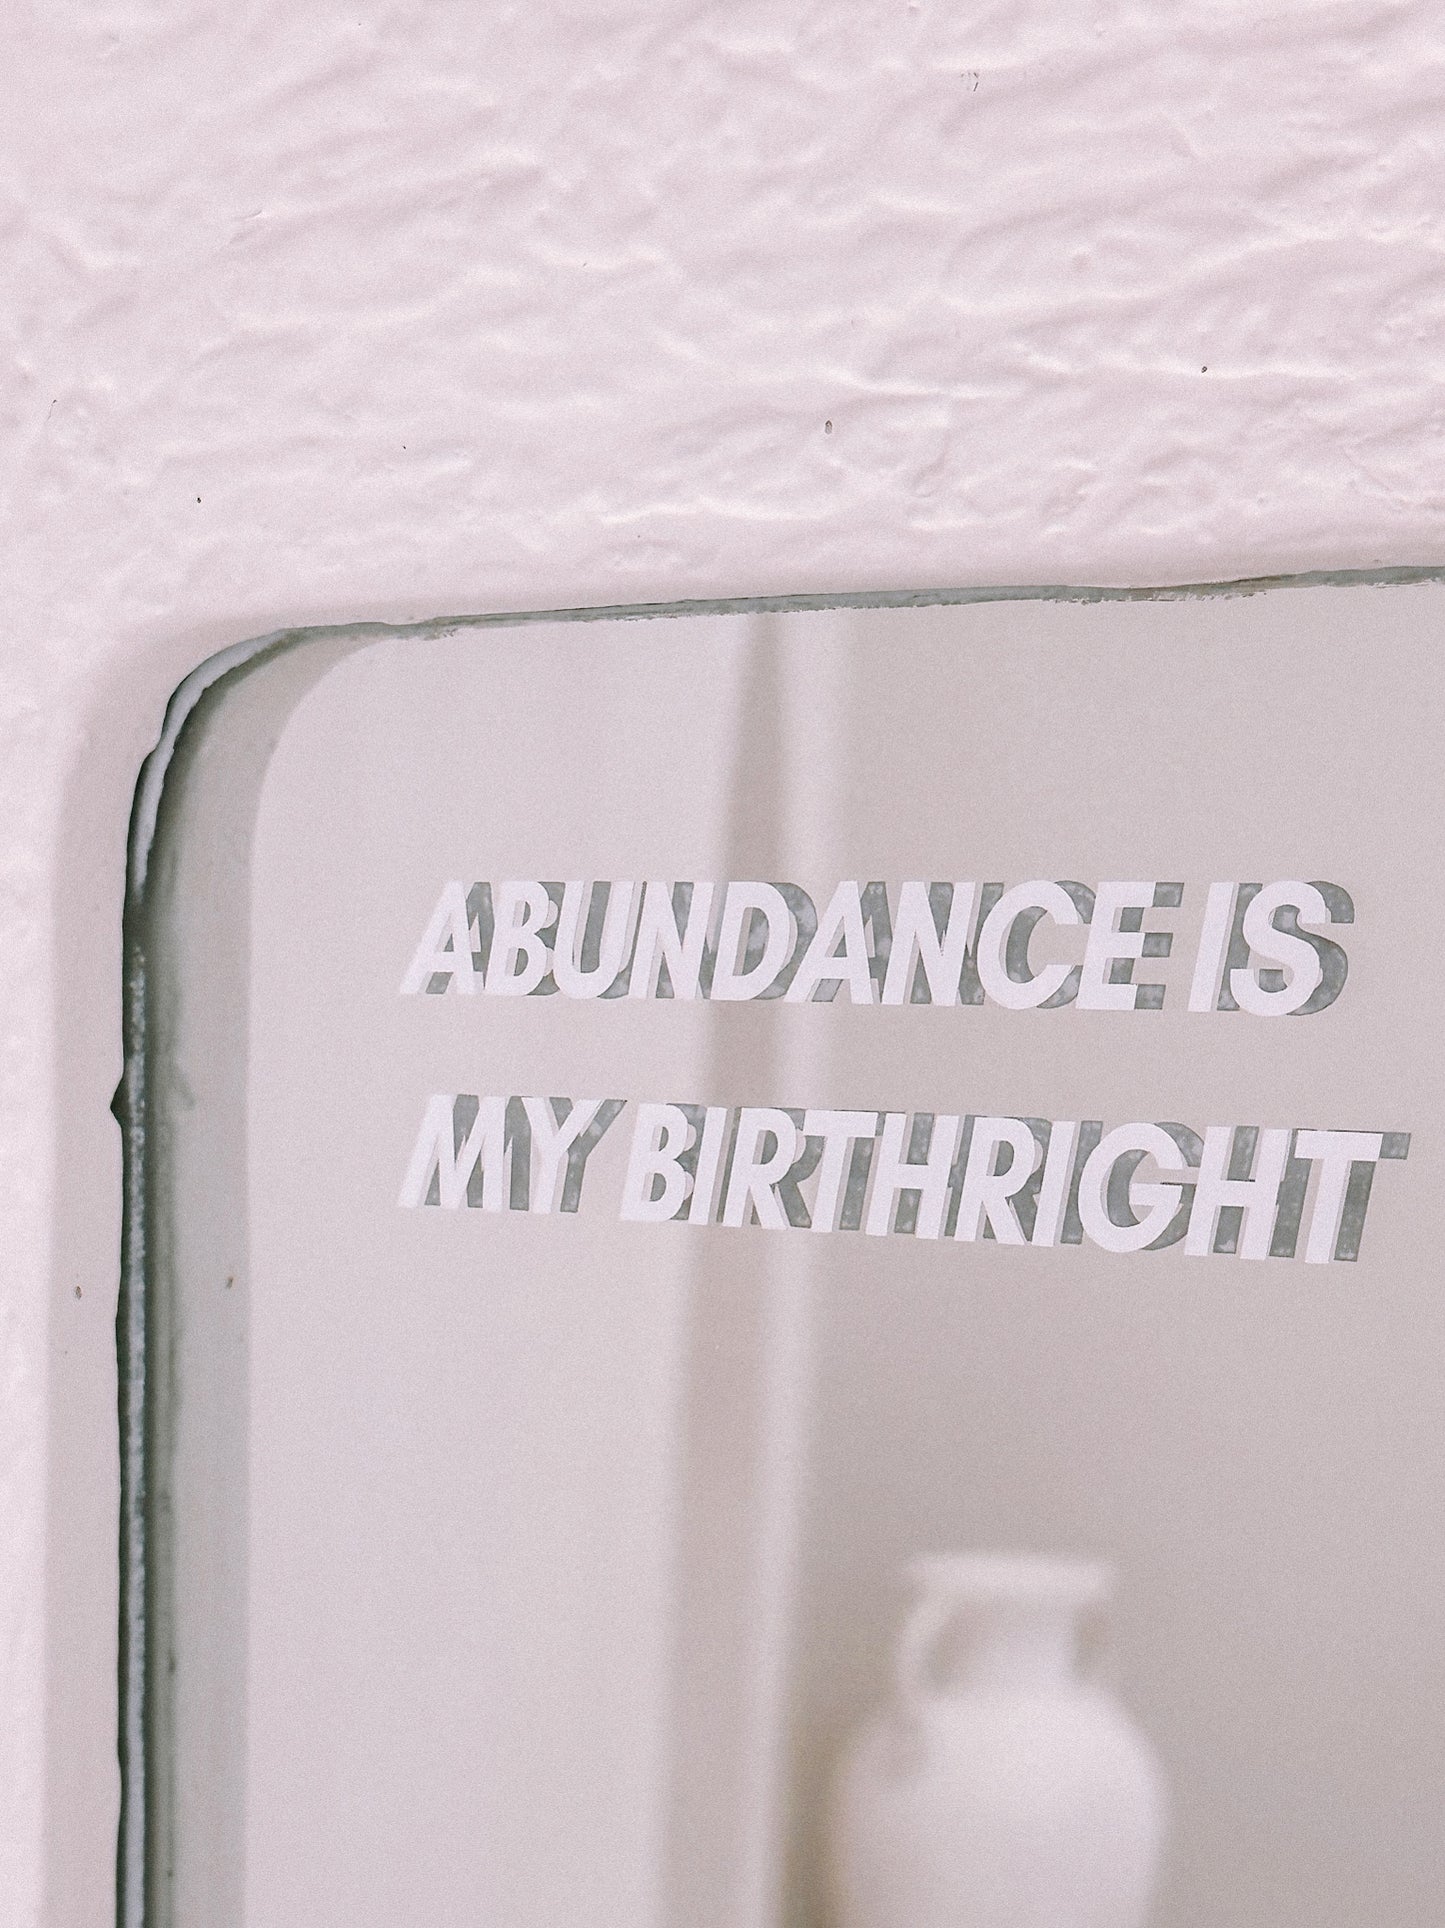 Abundance is my birthright - Decal